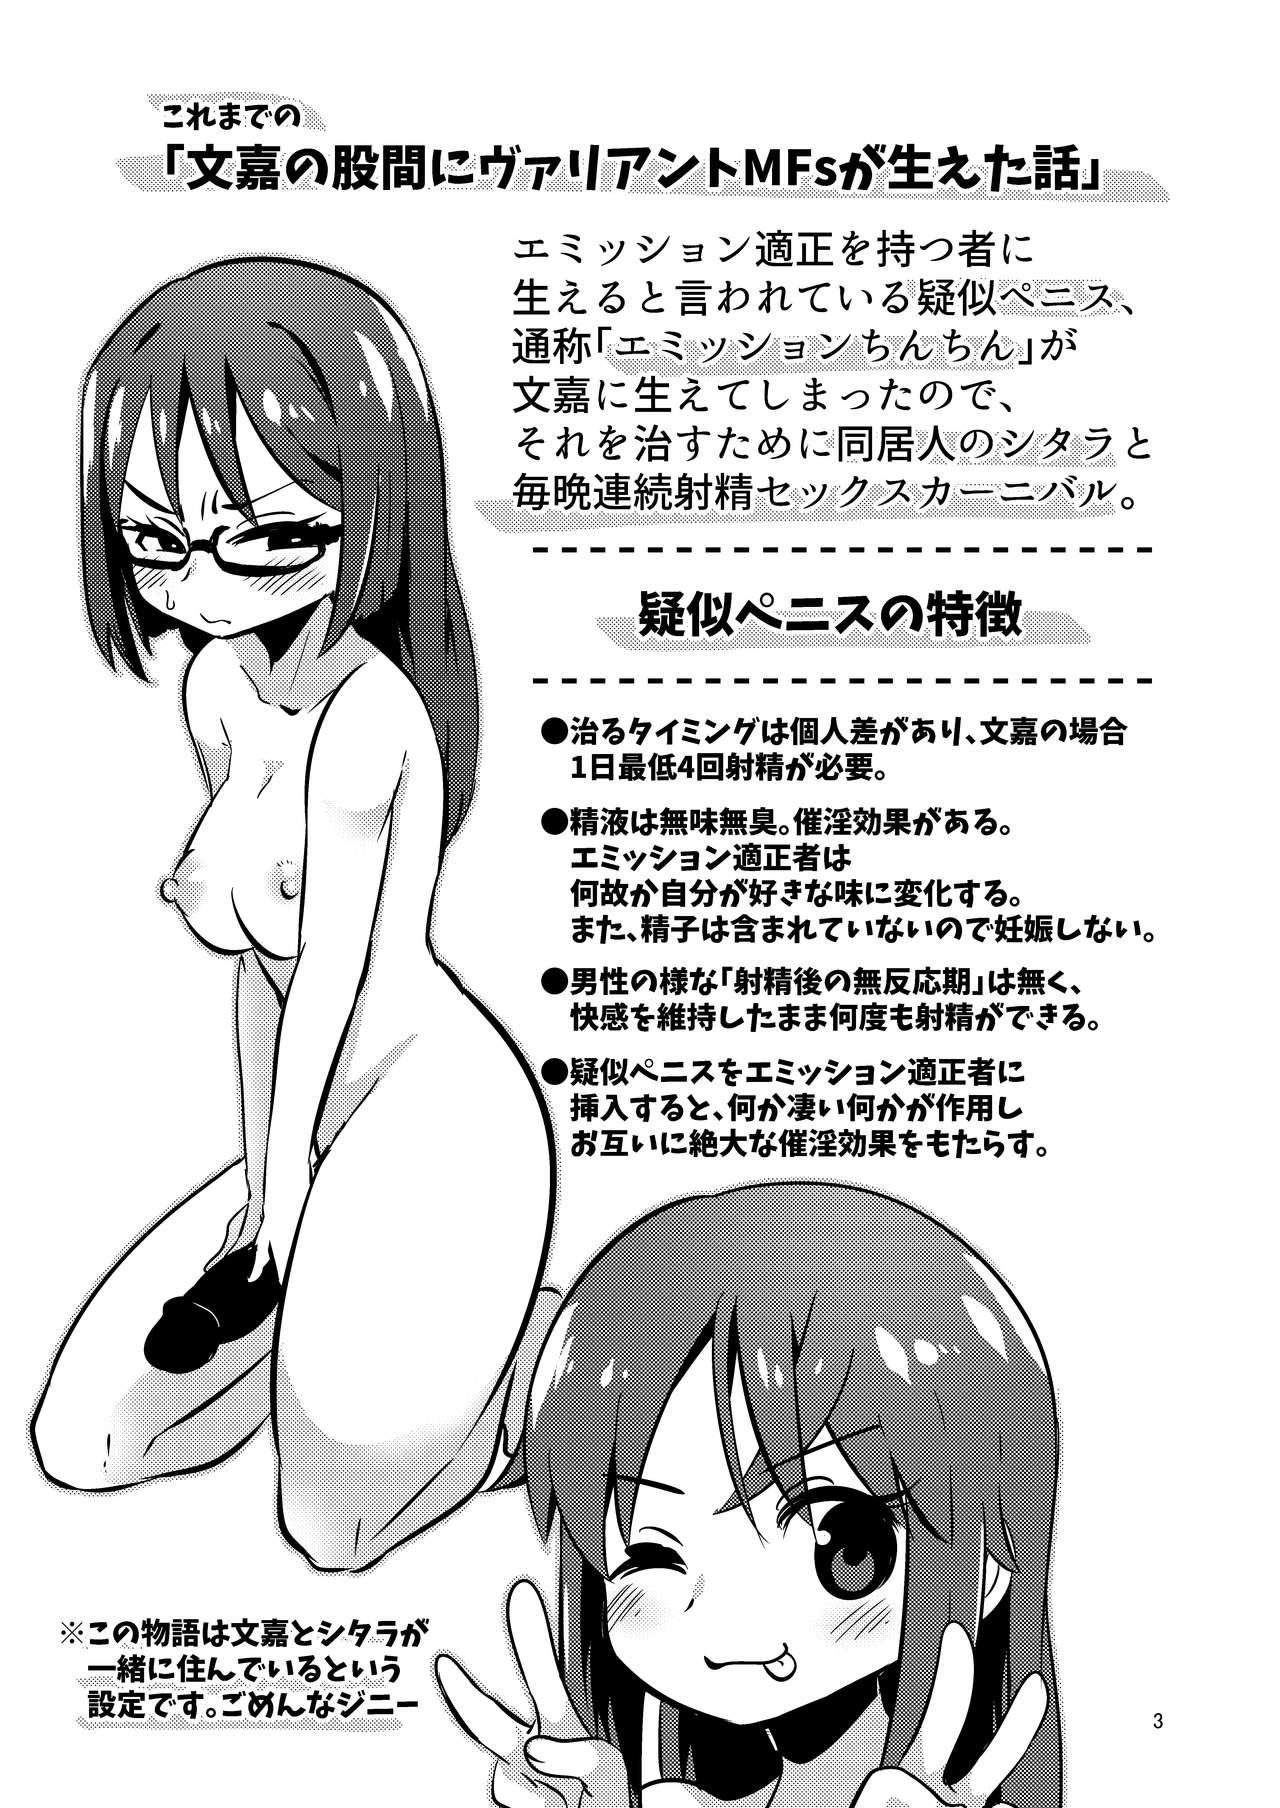 High Fumika no Kokan ni Variant MFs ga Haeta Hanashi 3 Kannin Hen - Alice gear aegis Italiano - Page 3